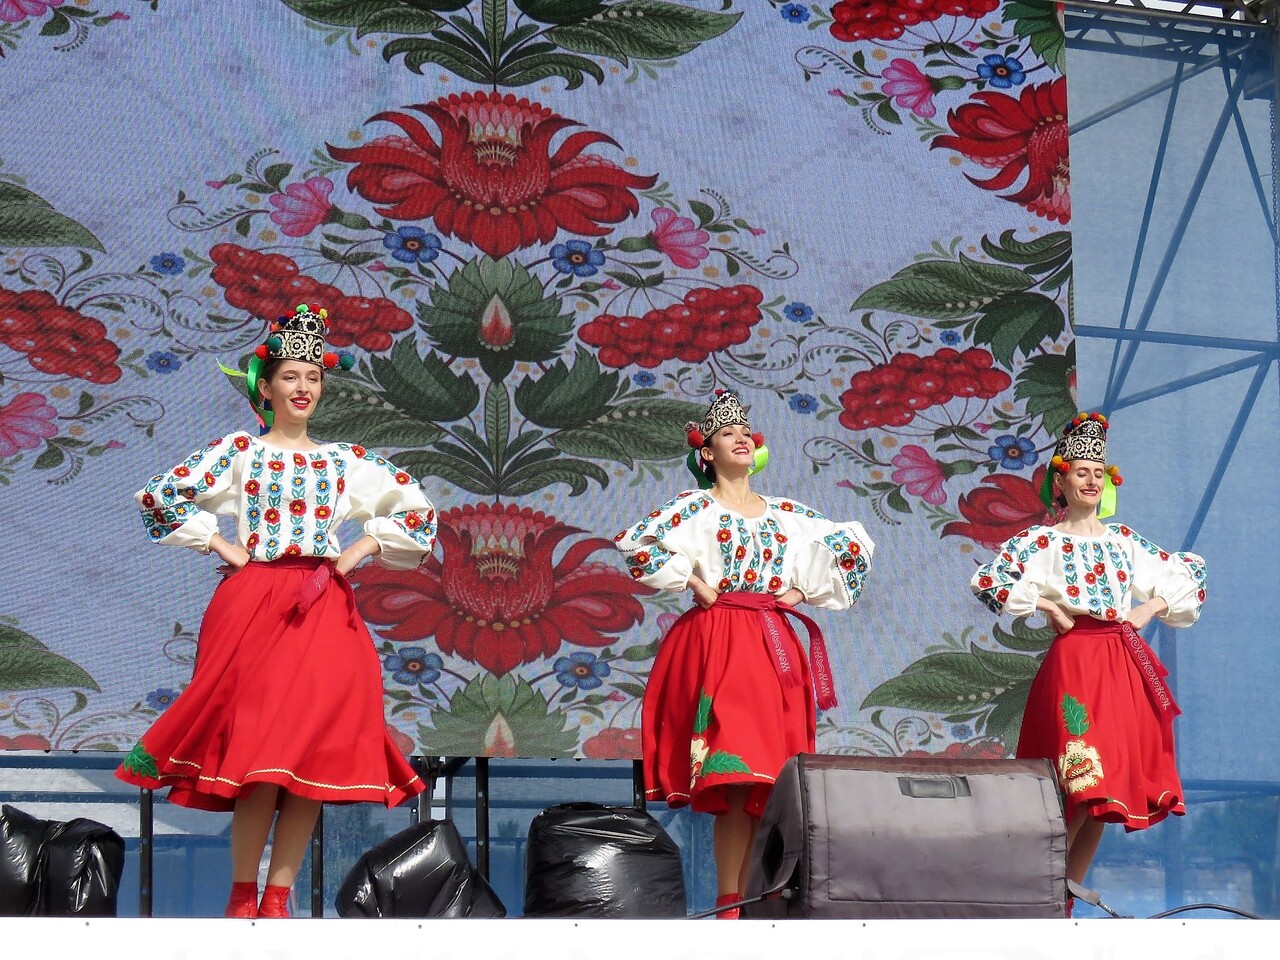 Болгарский фестиваль «Галароза»